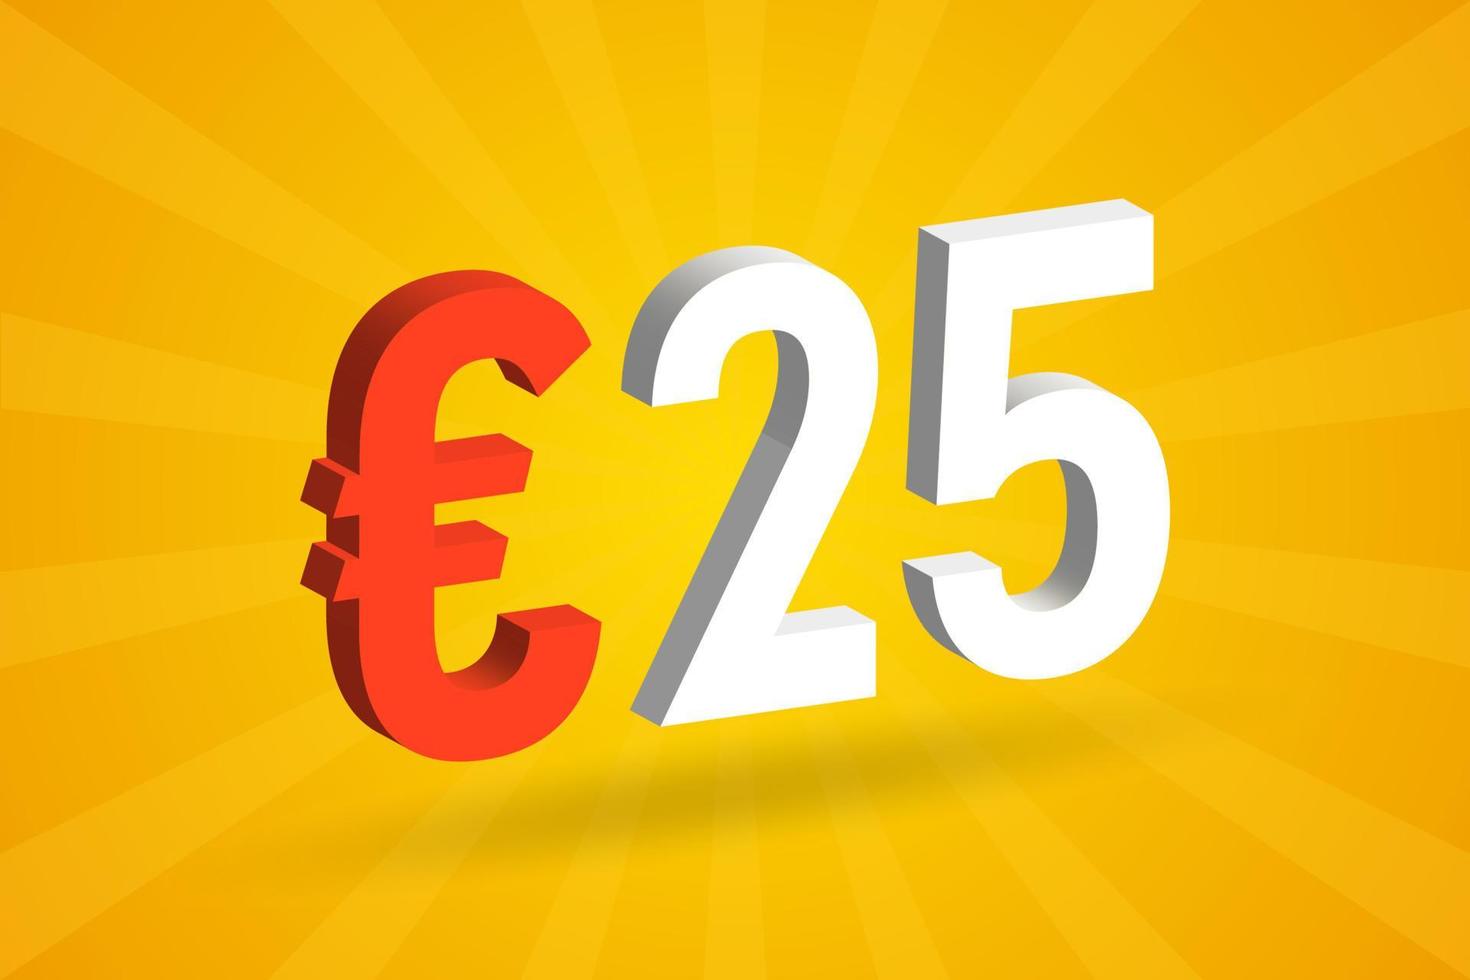 25 Euro Currency 3D vector text symbol. 3D 25 Euro European Union Money stock vector